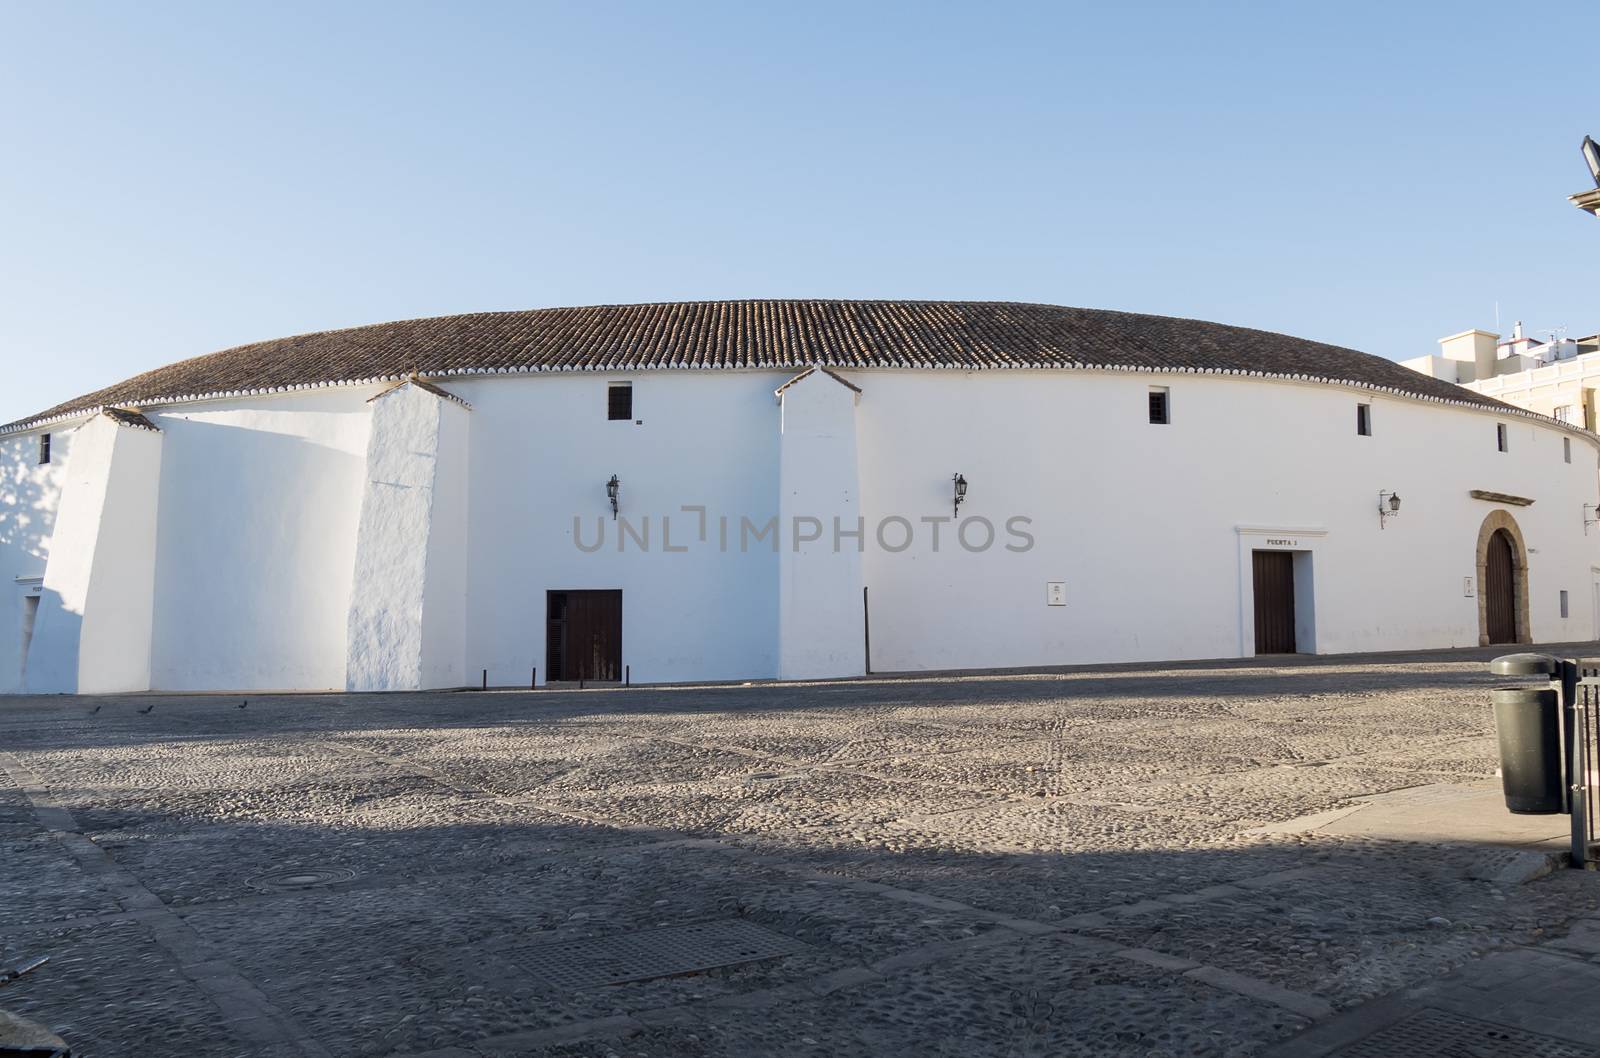 Exterior view of the bullring in Ronda, Malaga, Spain by max8xam